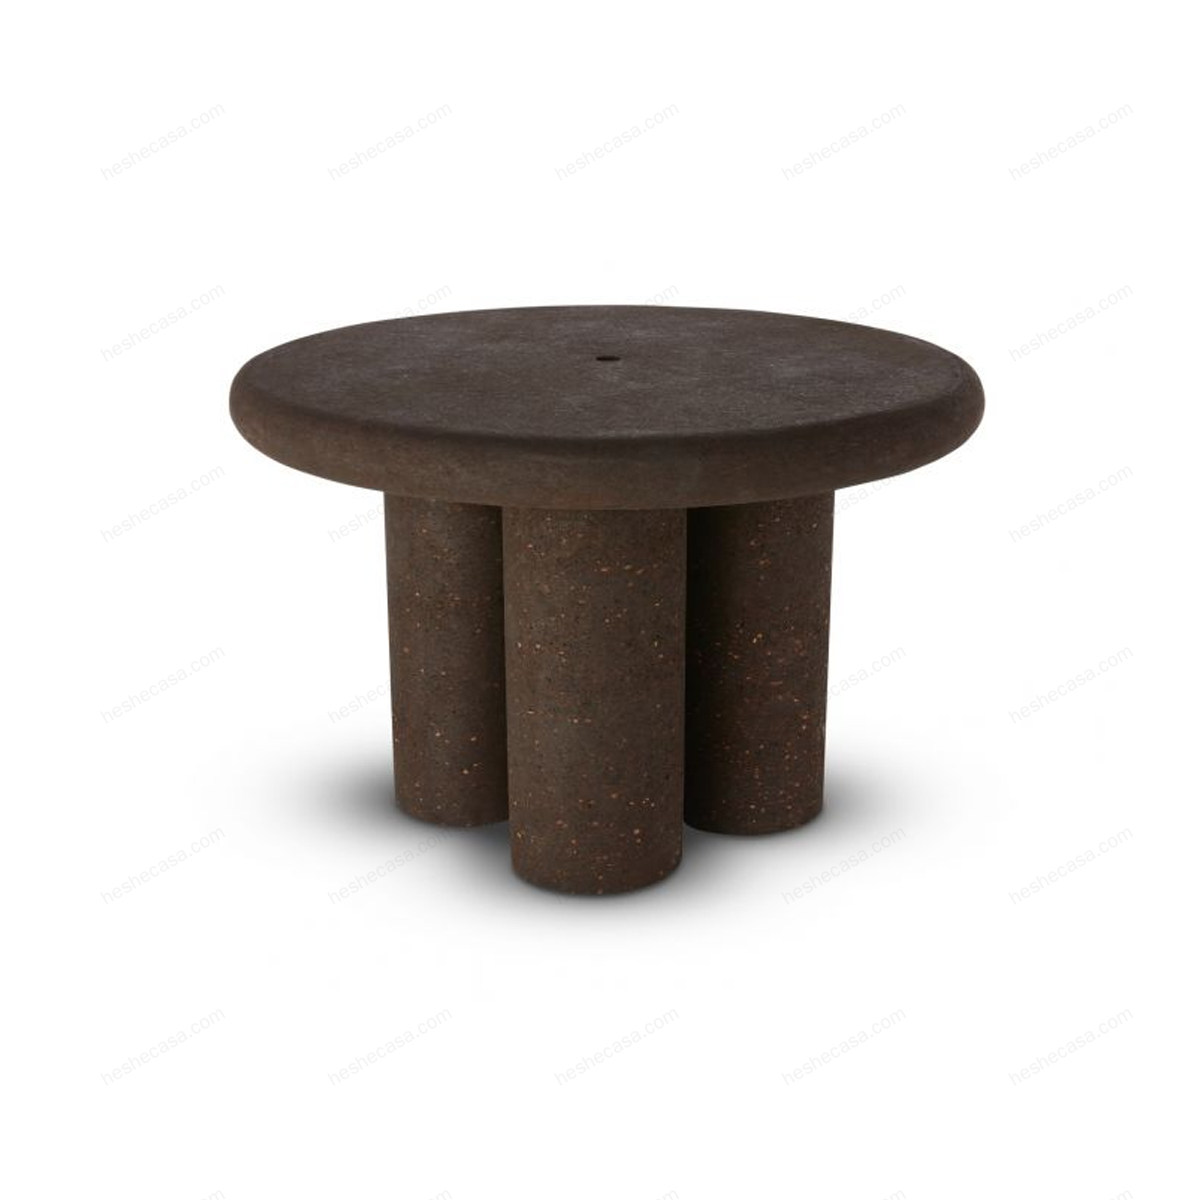 Cork Round Table 1200mm餐桌